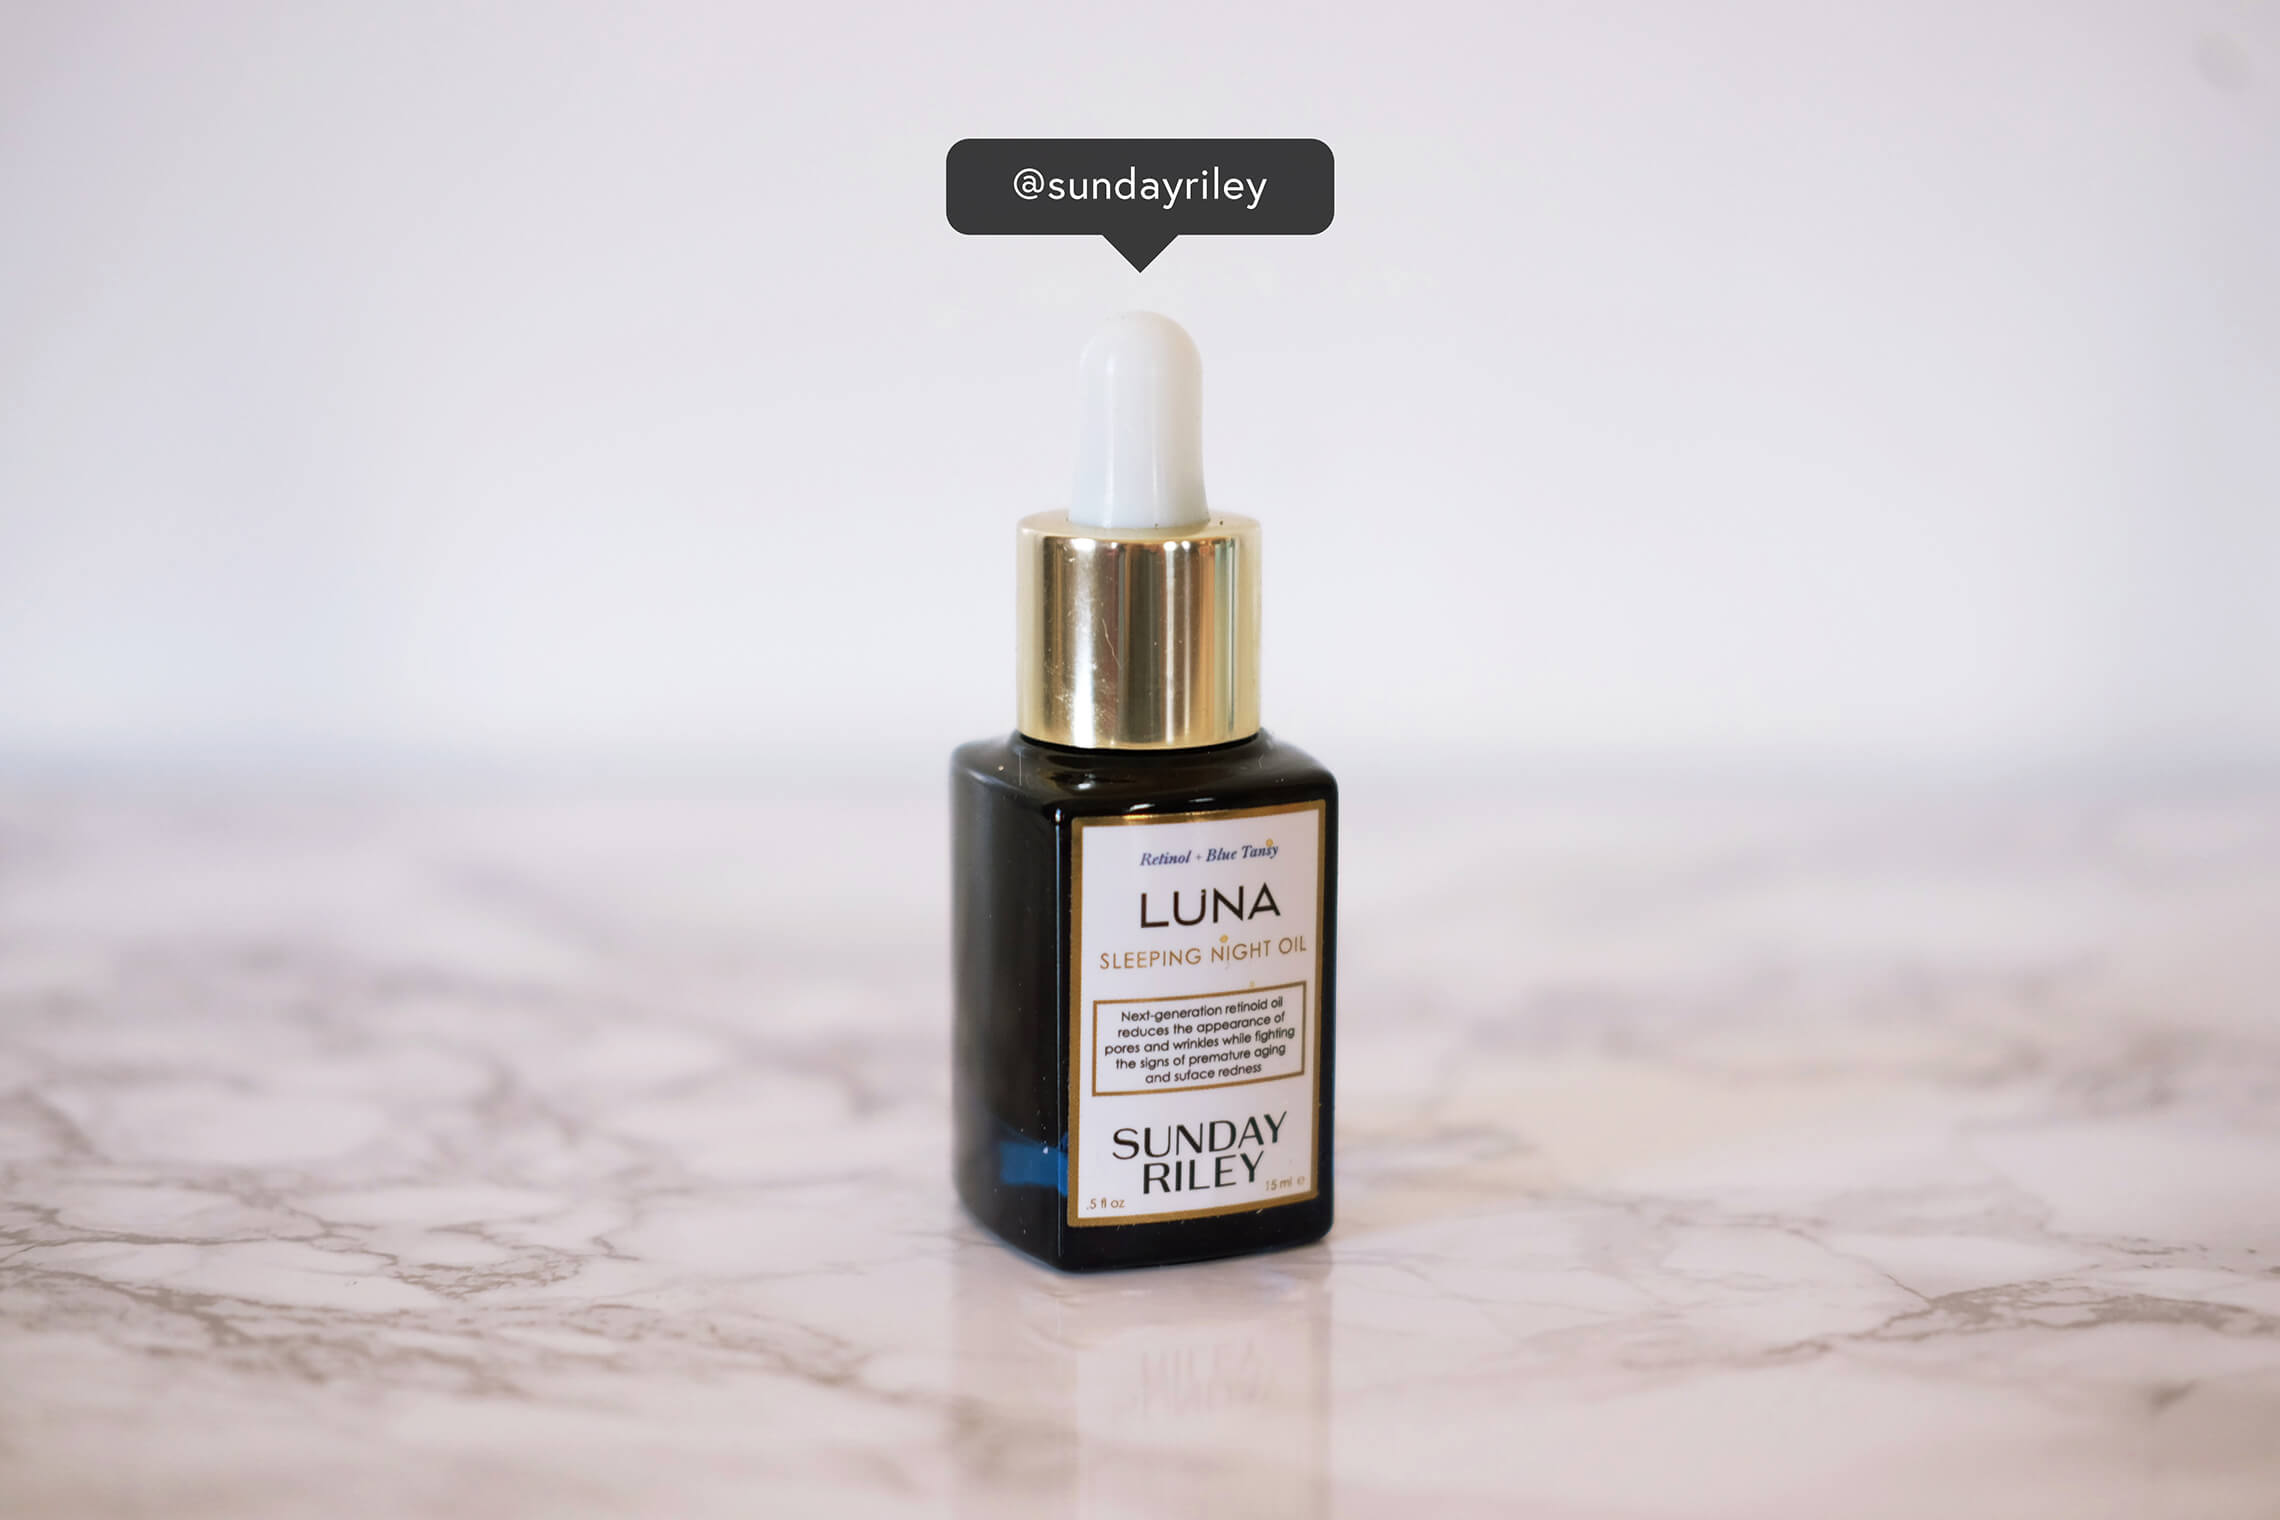 keiko lynn best skin care products 2018 sunday riley luna sleeping night oil